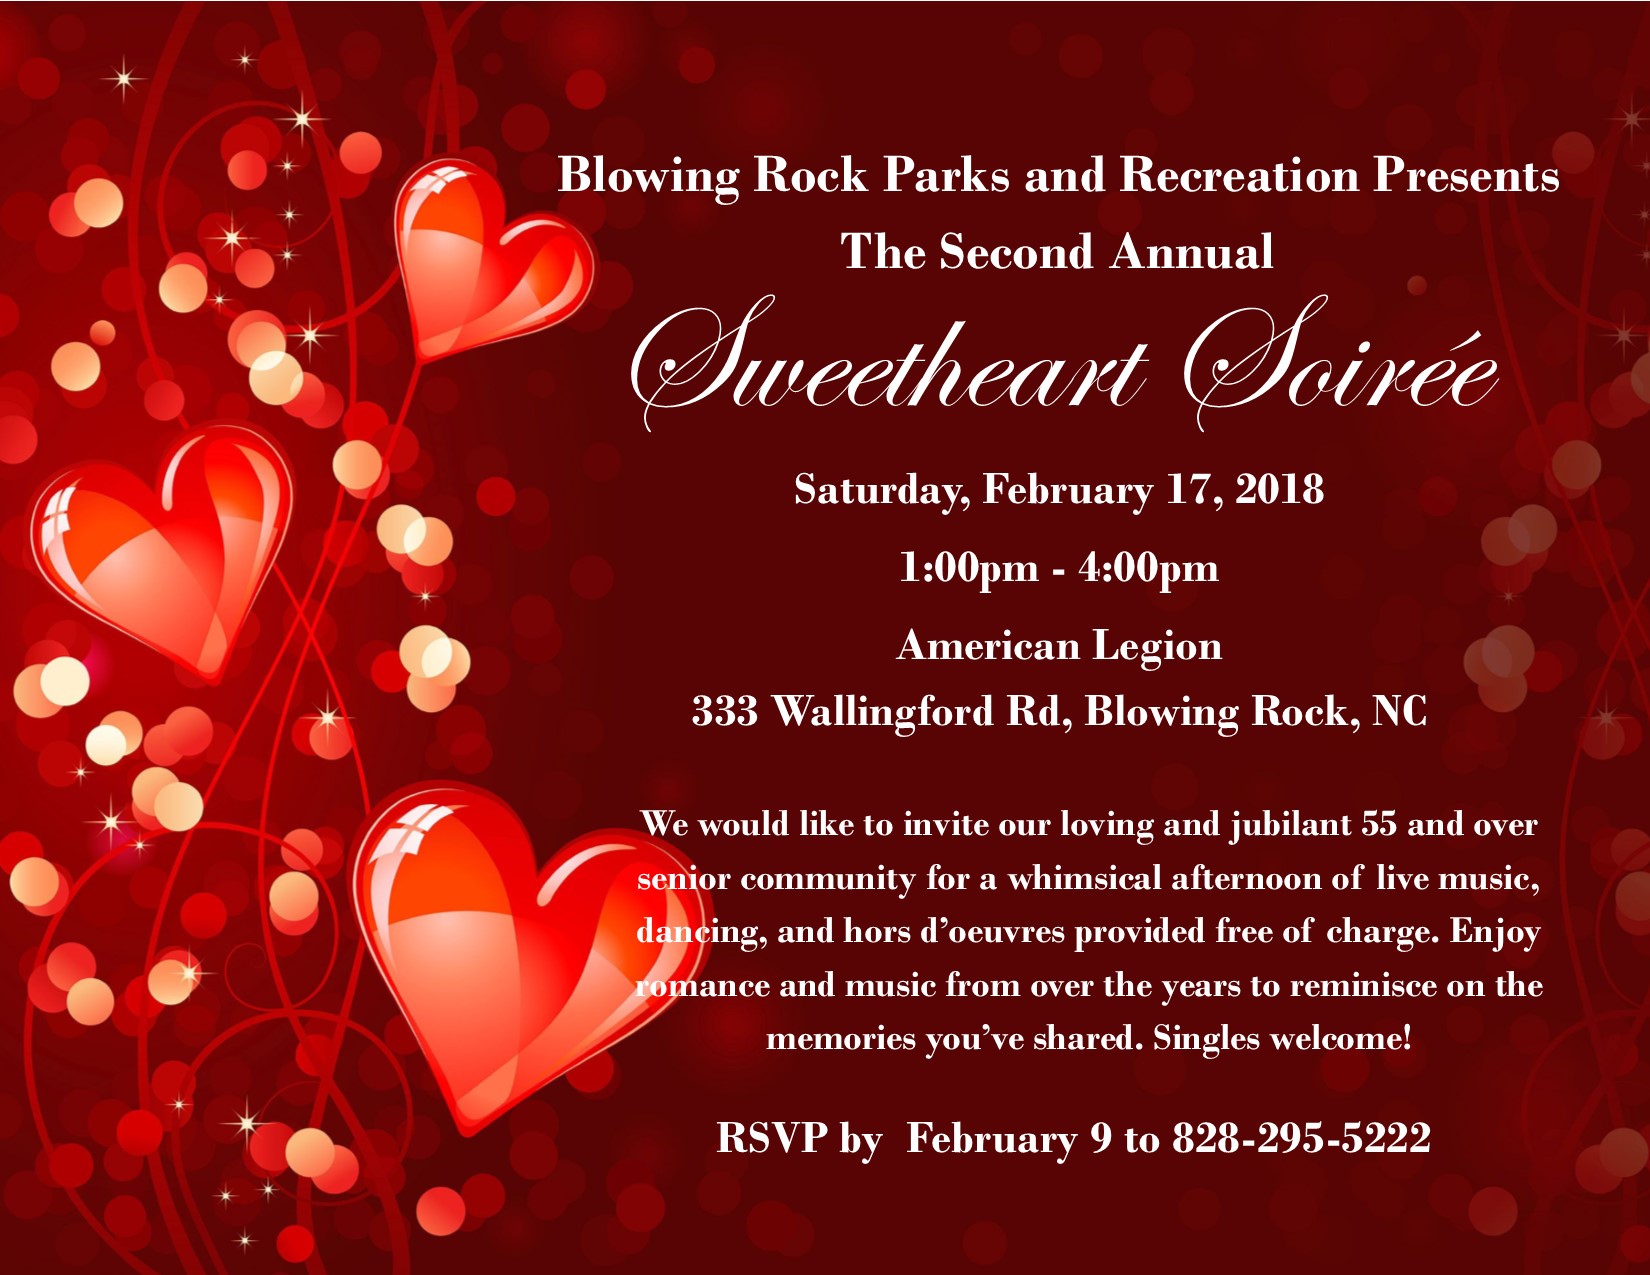 Sweetheart Soiree Senior Valentine's Dance | Town of Blowing Rock